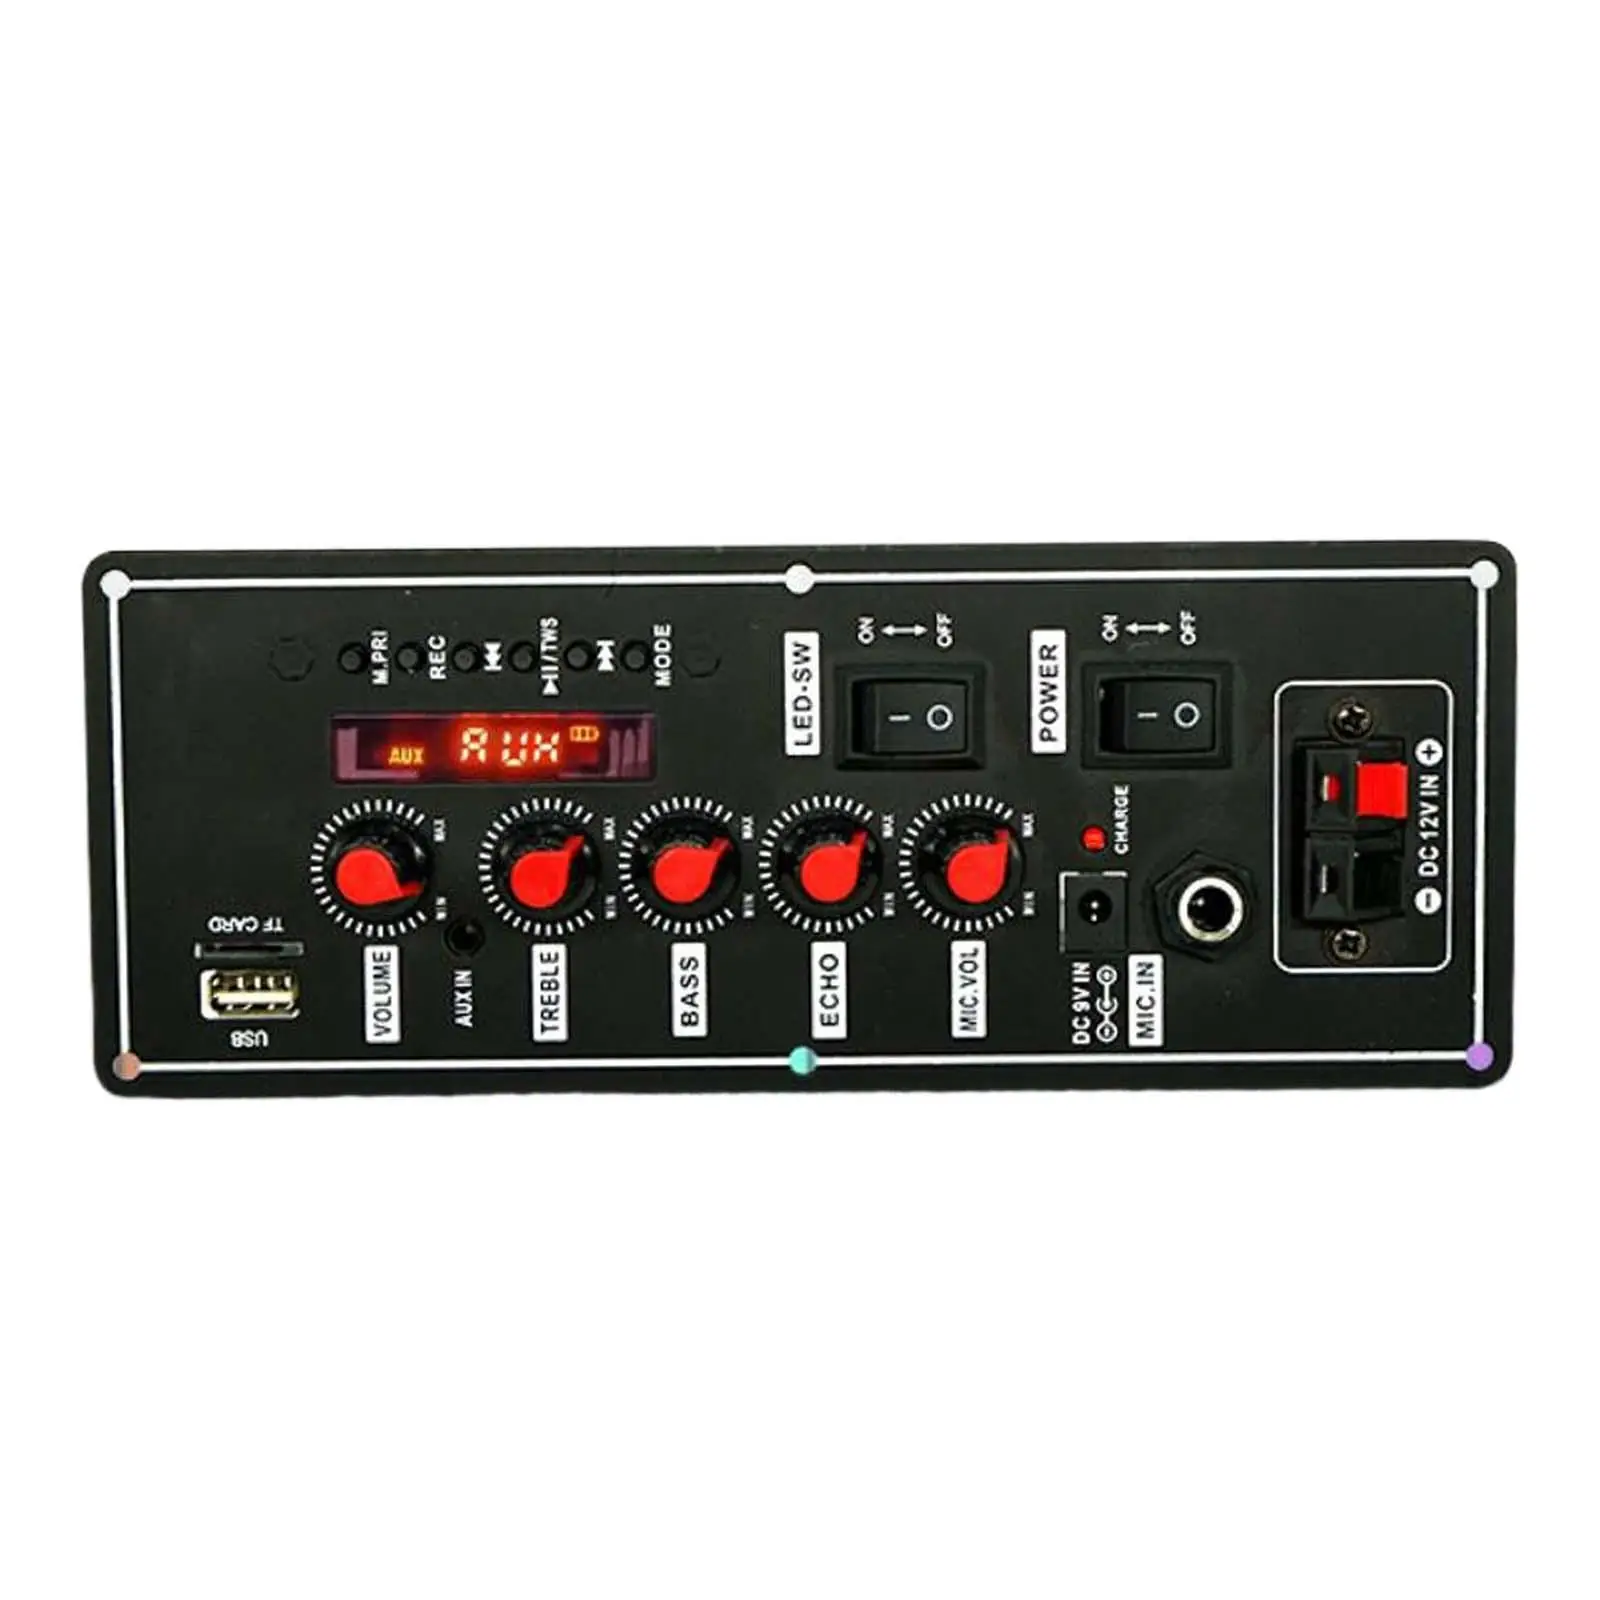 MP3 Decoder Player Module 2x10W Support TF Card/ USB / FM Radio Button Control Audio Decoder Board Audio Module Easy to Operate